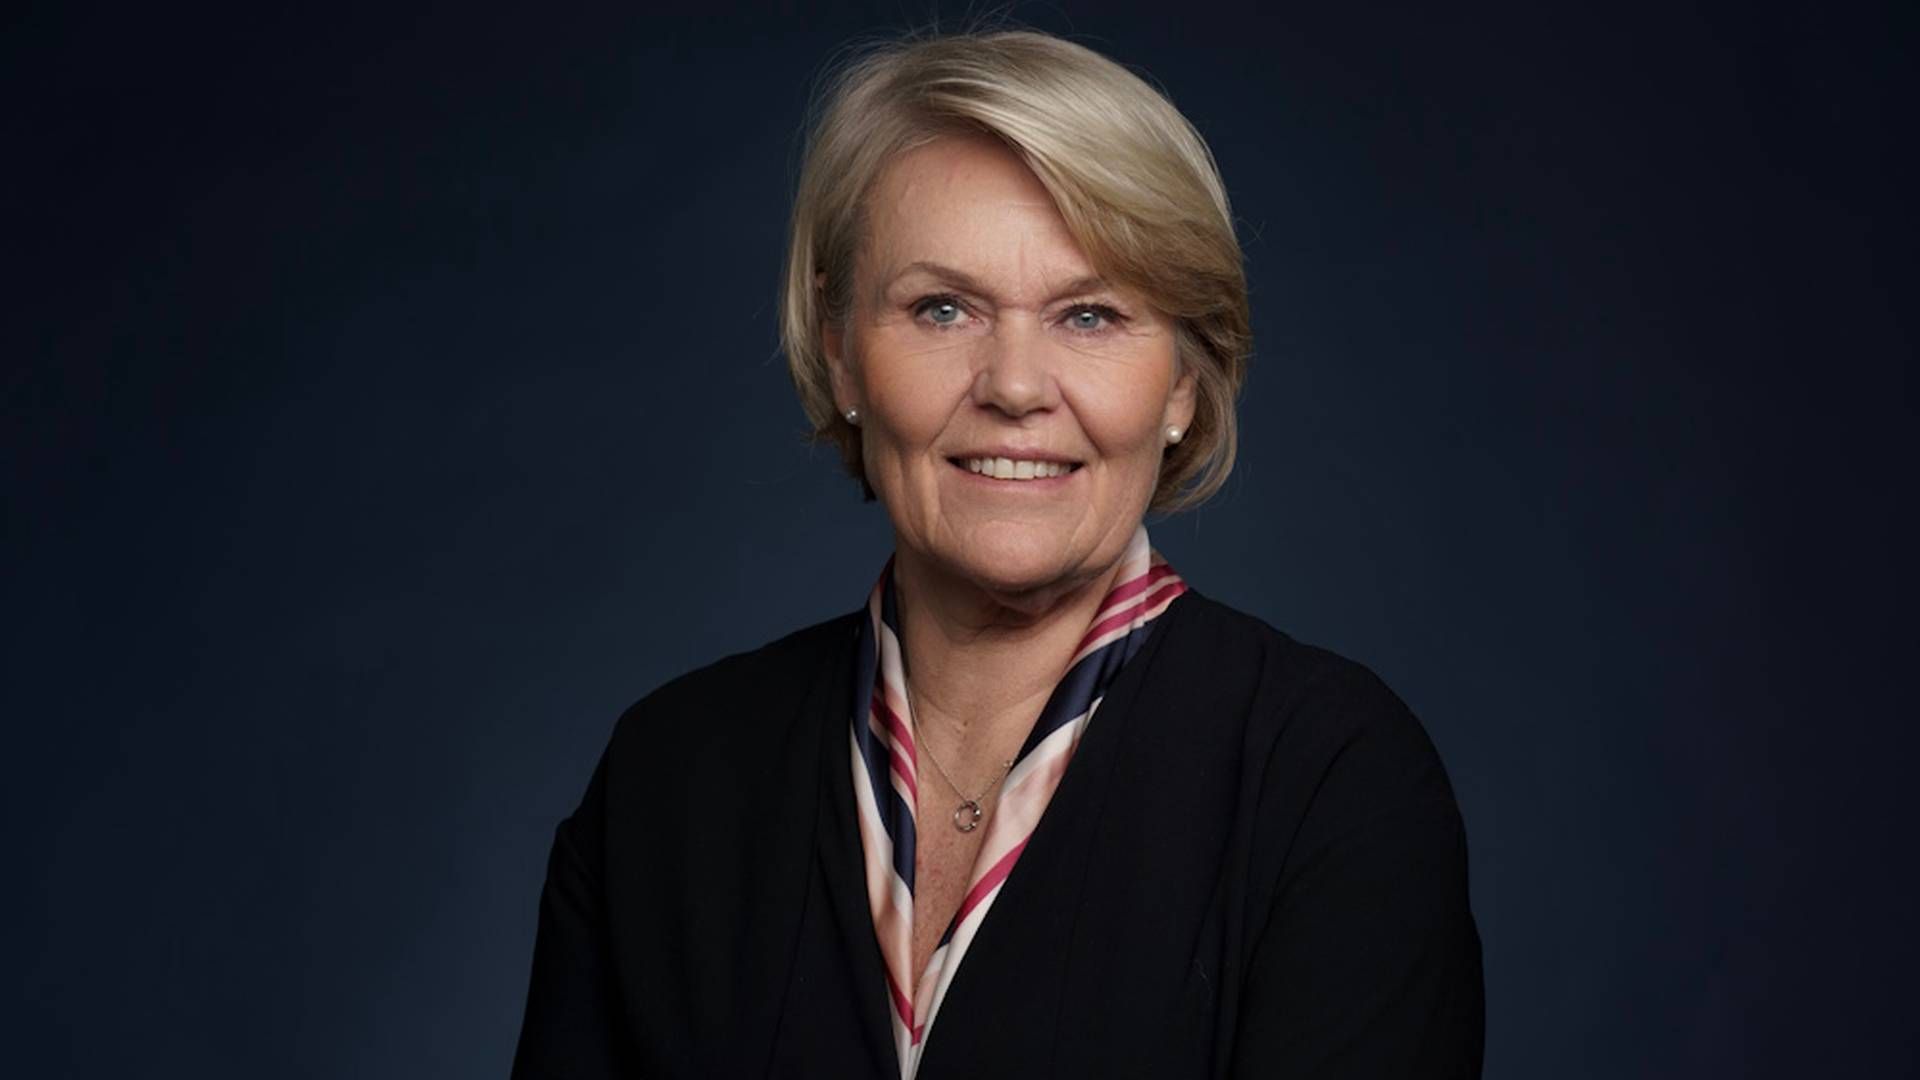 HOVEDTILLITSVALGT: Ellen Kristin Enger er forsikringsrådgiver og hovedtillitsvalgt i Gjensidige | Foto: Gjensidige